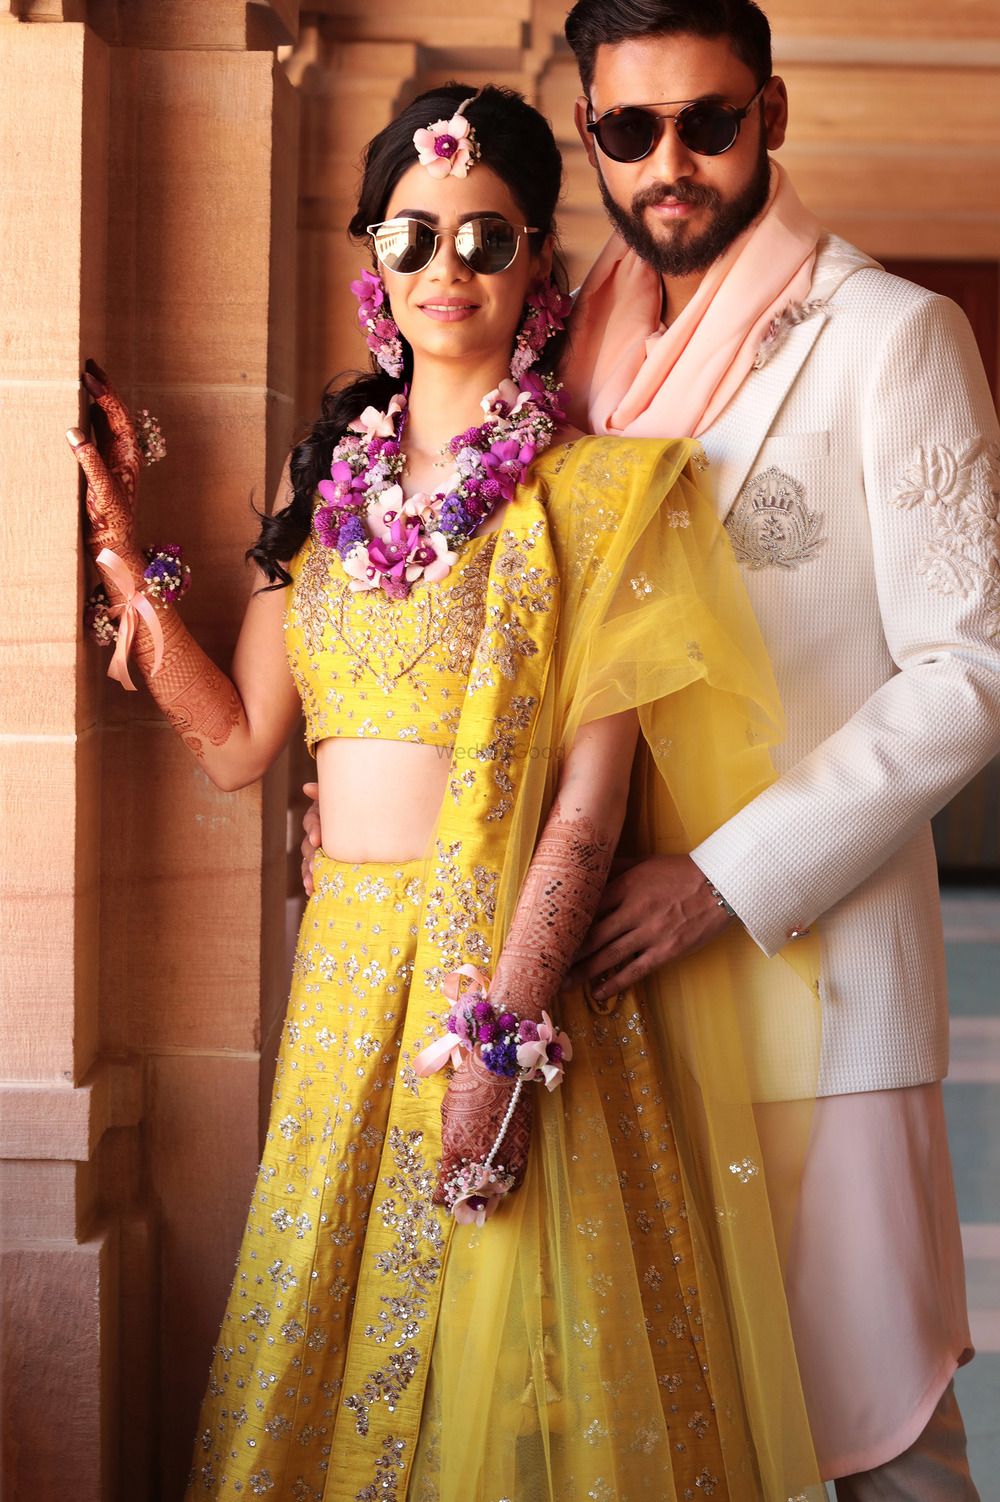 Photo of Bride and groom on mehendi wearing sunglasses